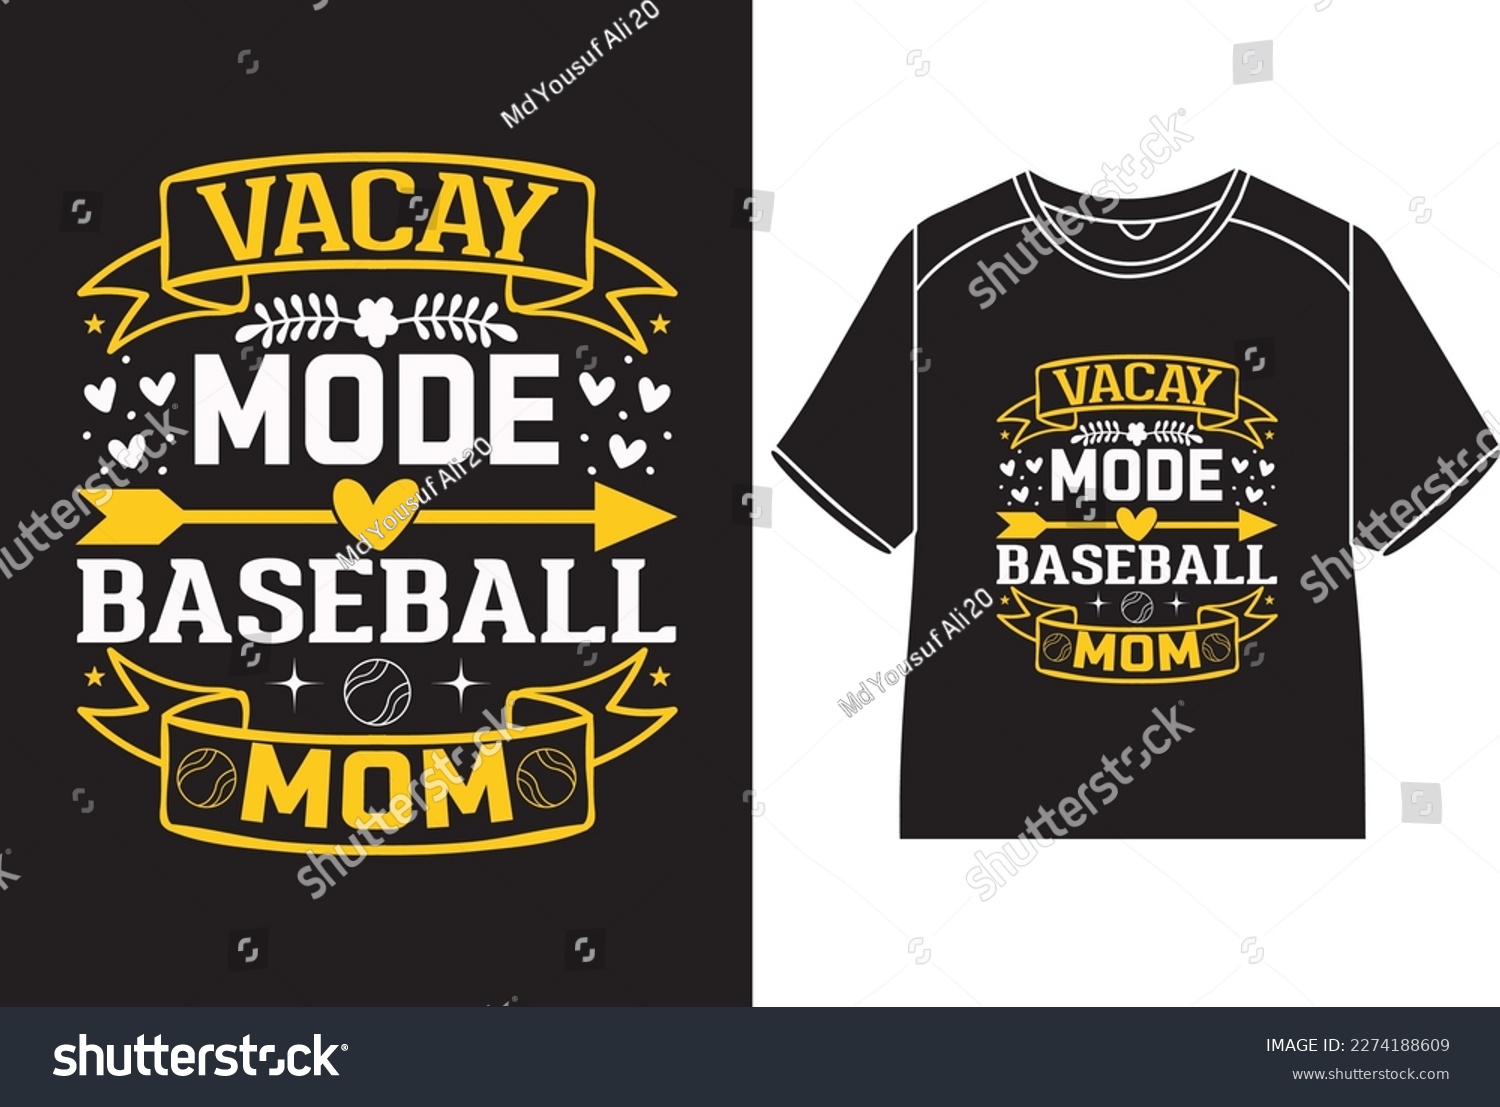 SVG of Vacay mode baseball mom T-Shirt Design svg